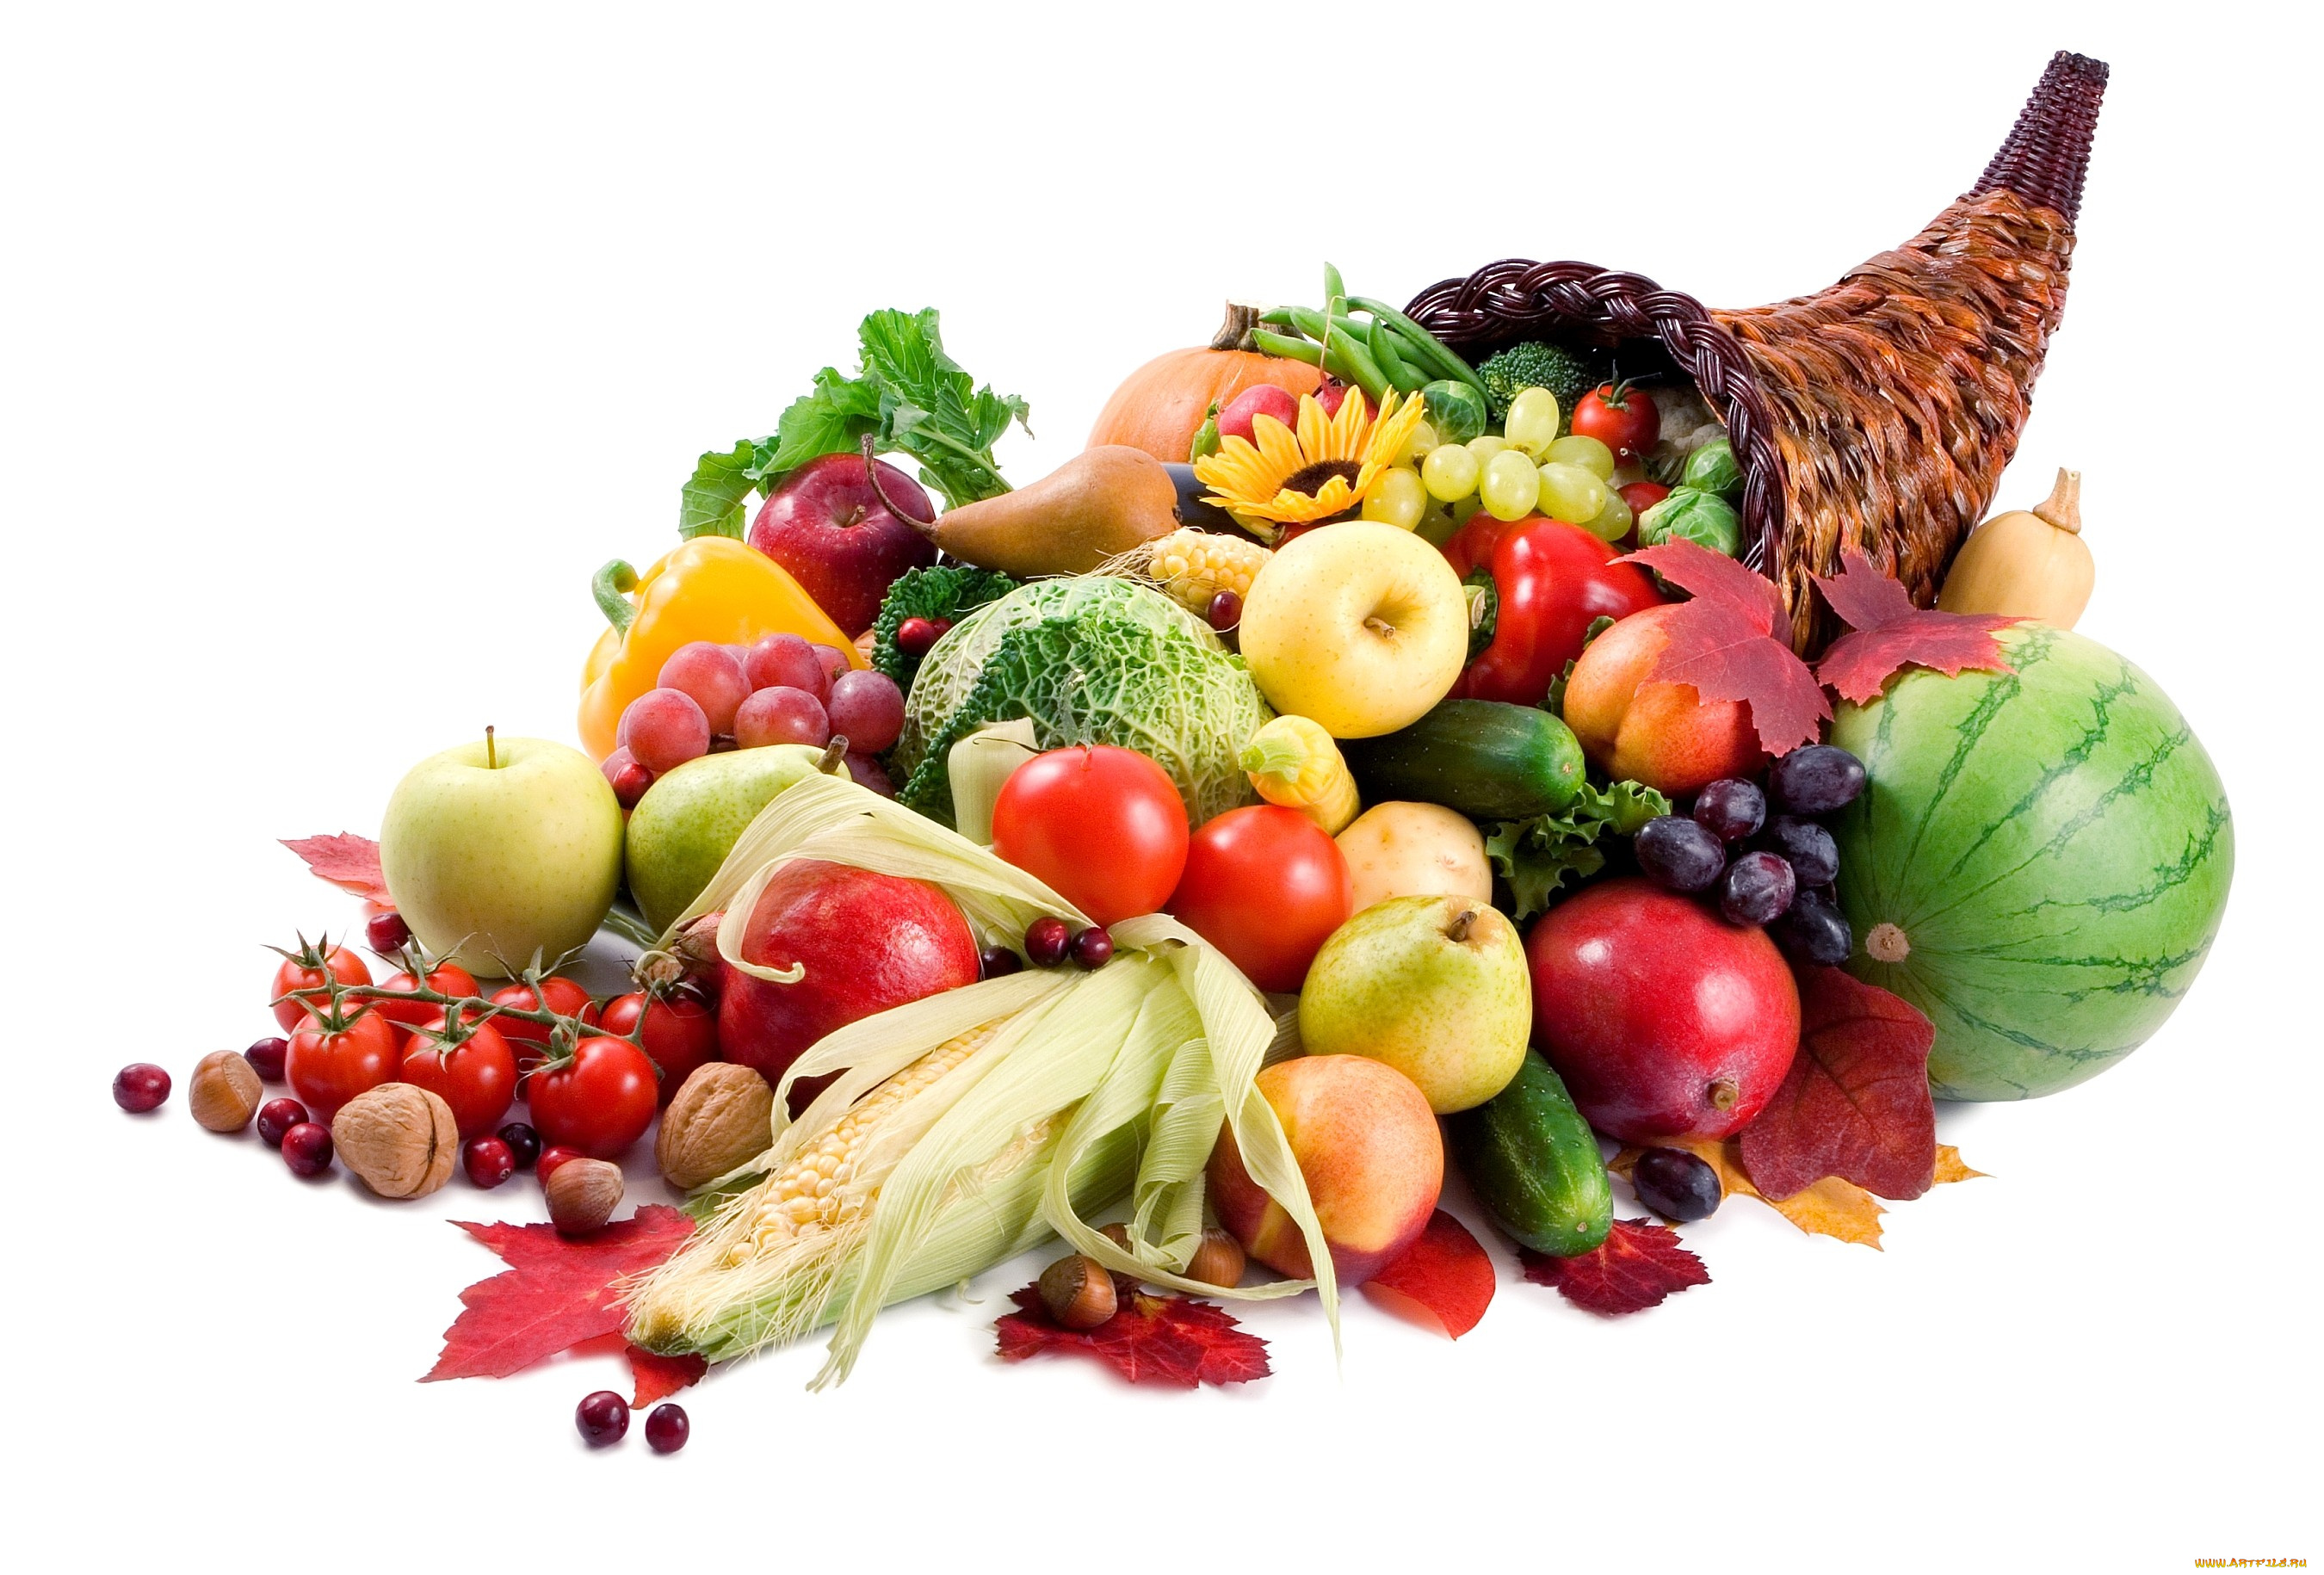 еда, фрукты, овощи, вместе, рог, изобилия, кукуруза, арбуз, помидоры, яблоки, томаты, початок